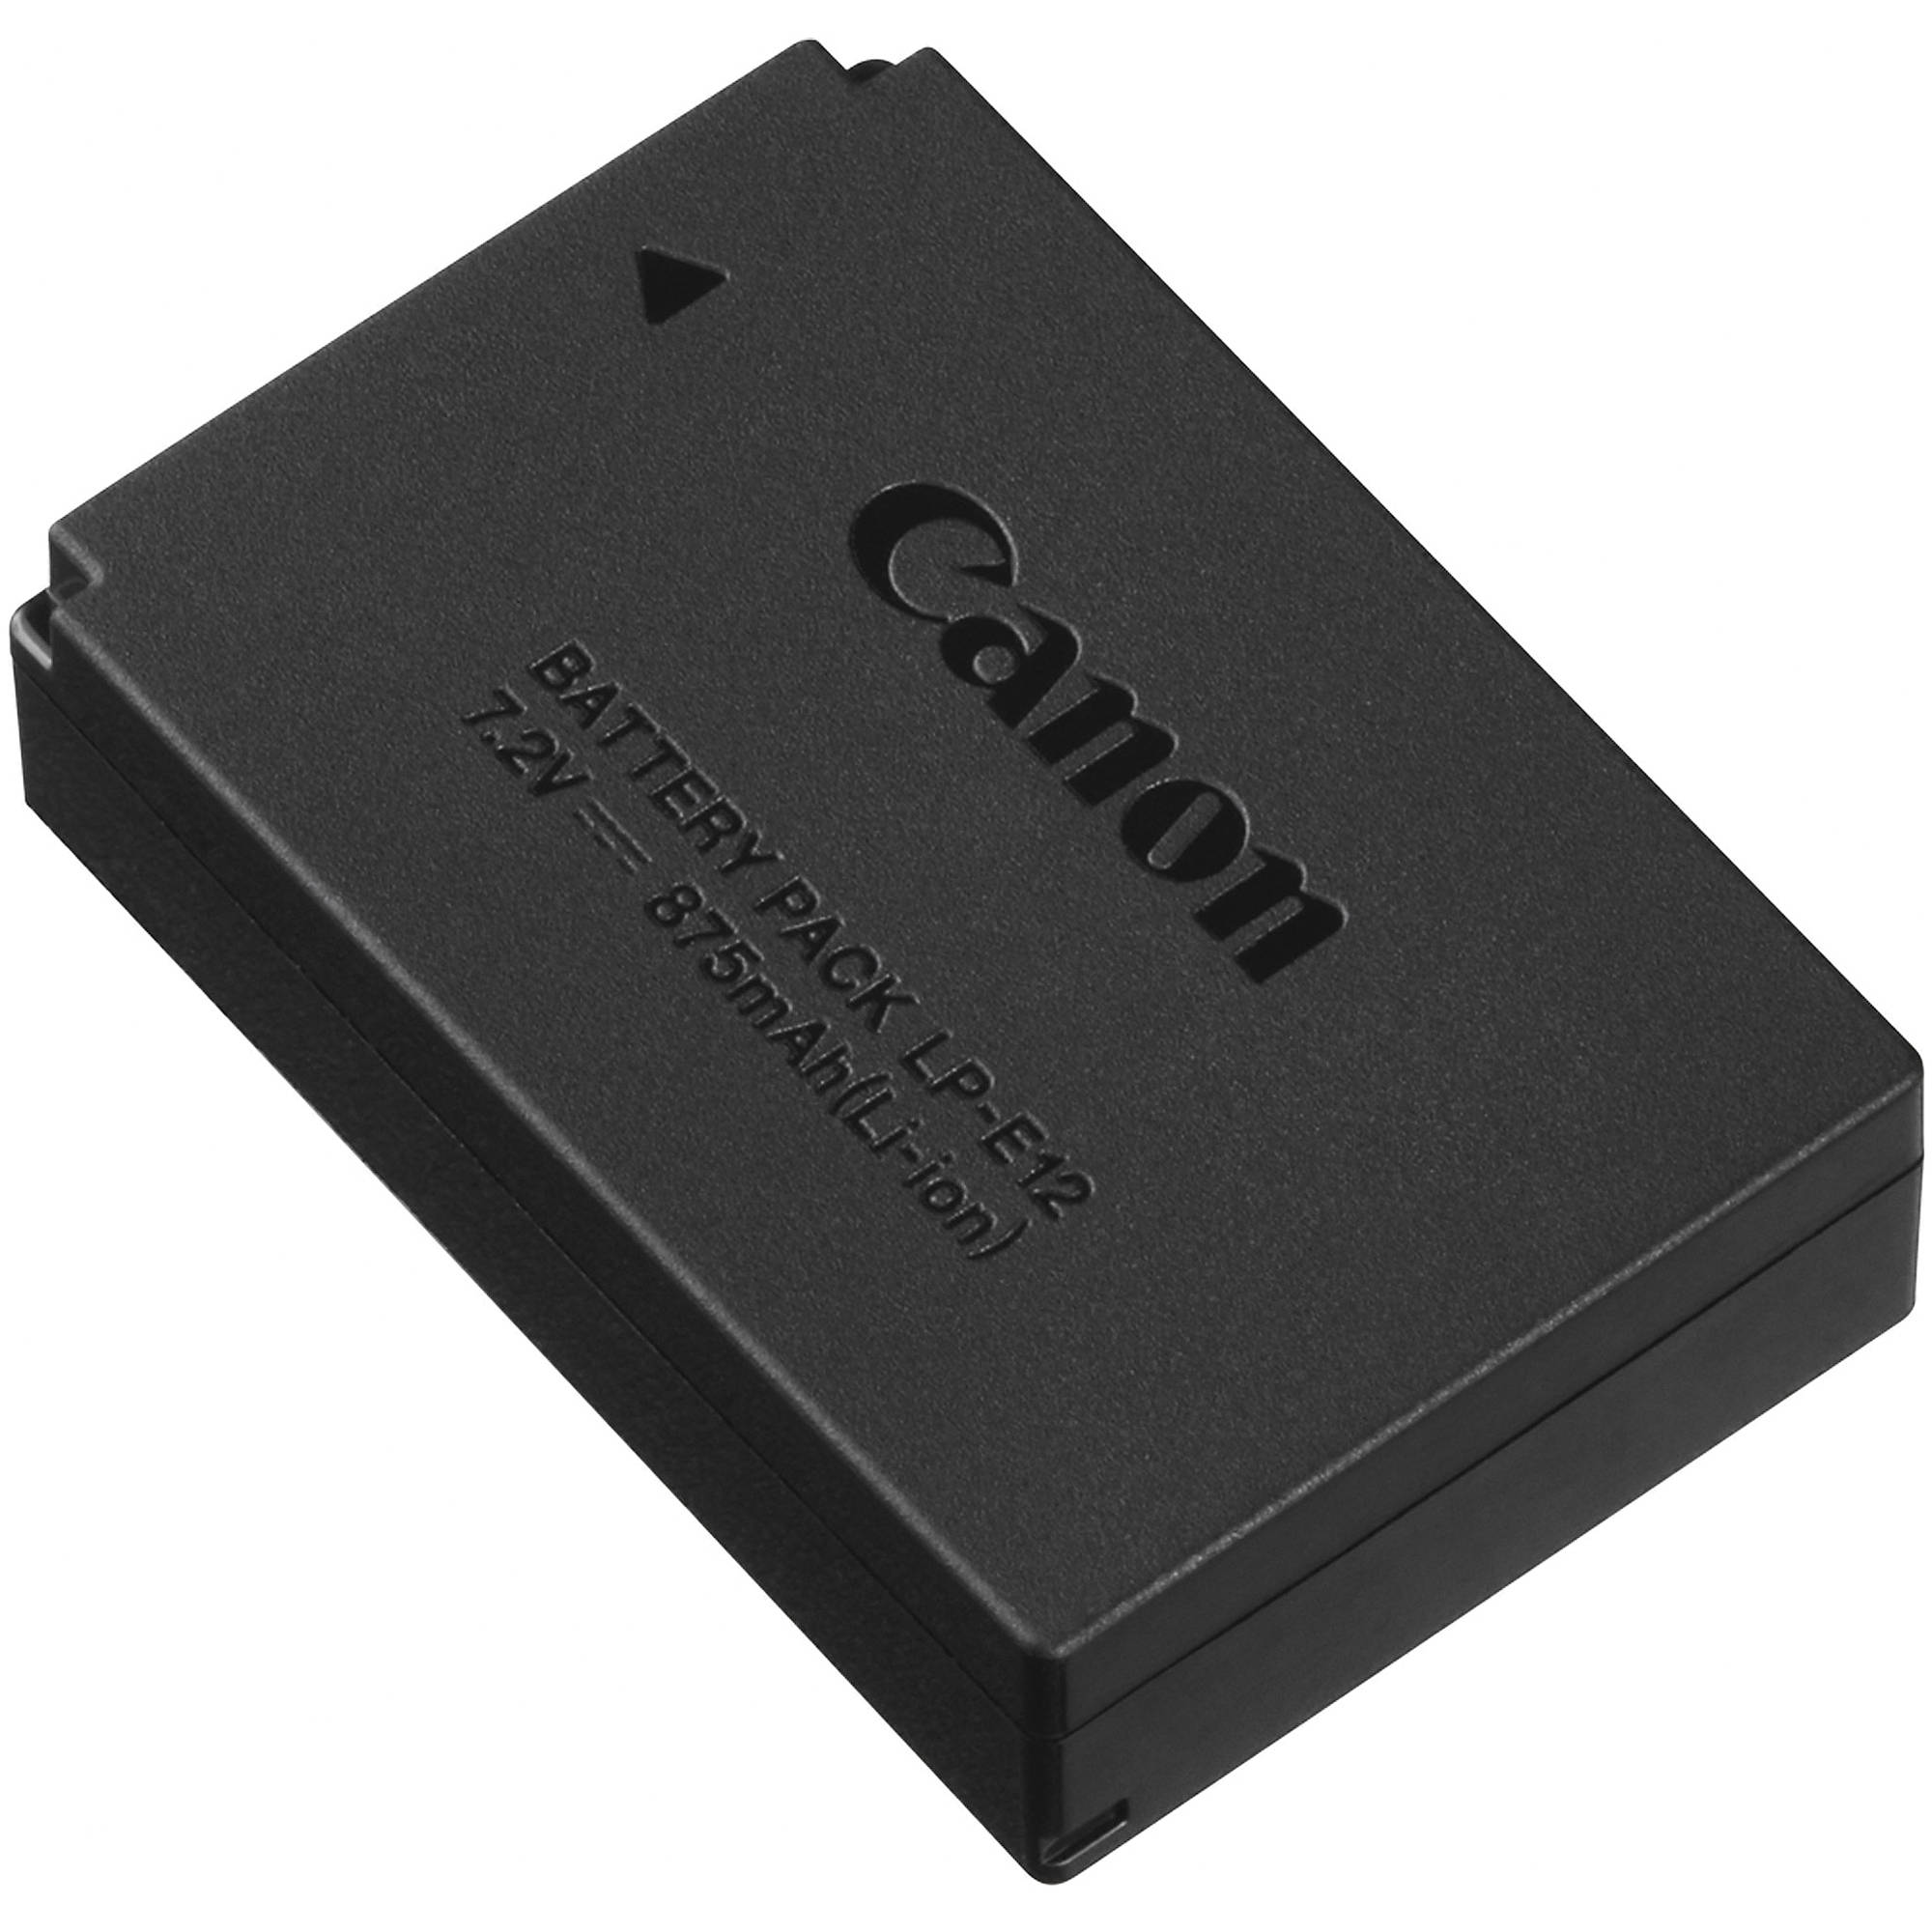 Đang tải Canon_6760b002_LP_E12_Lithium_Ion_Battery_Pack_883405.jpg…